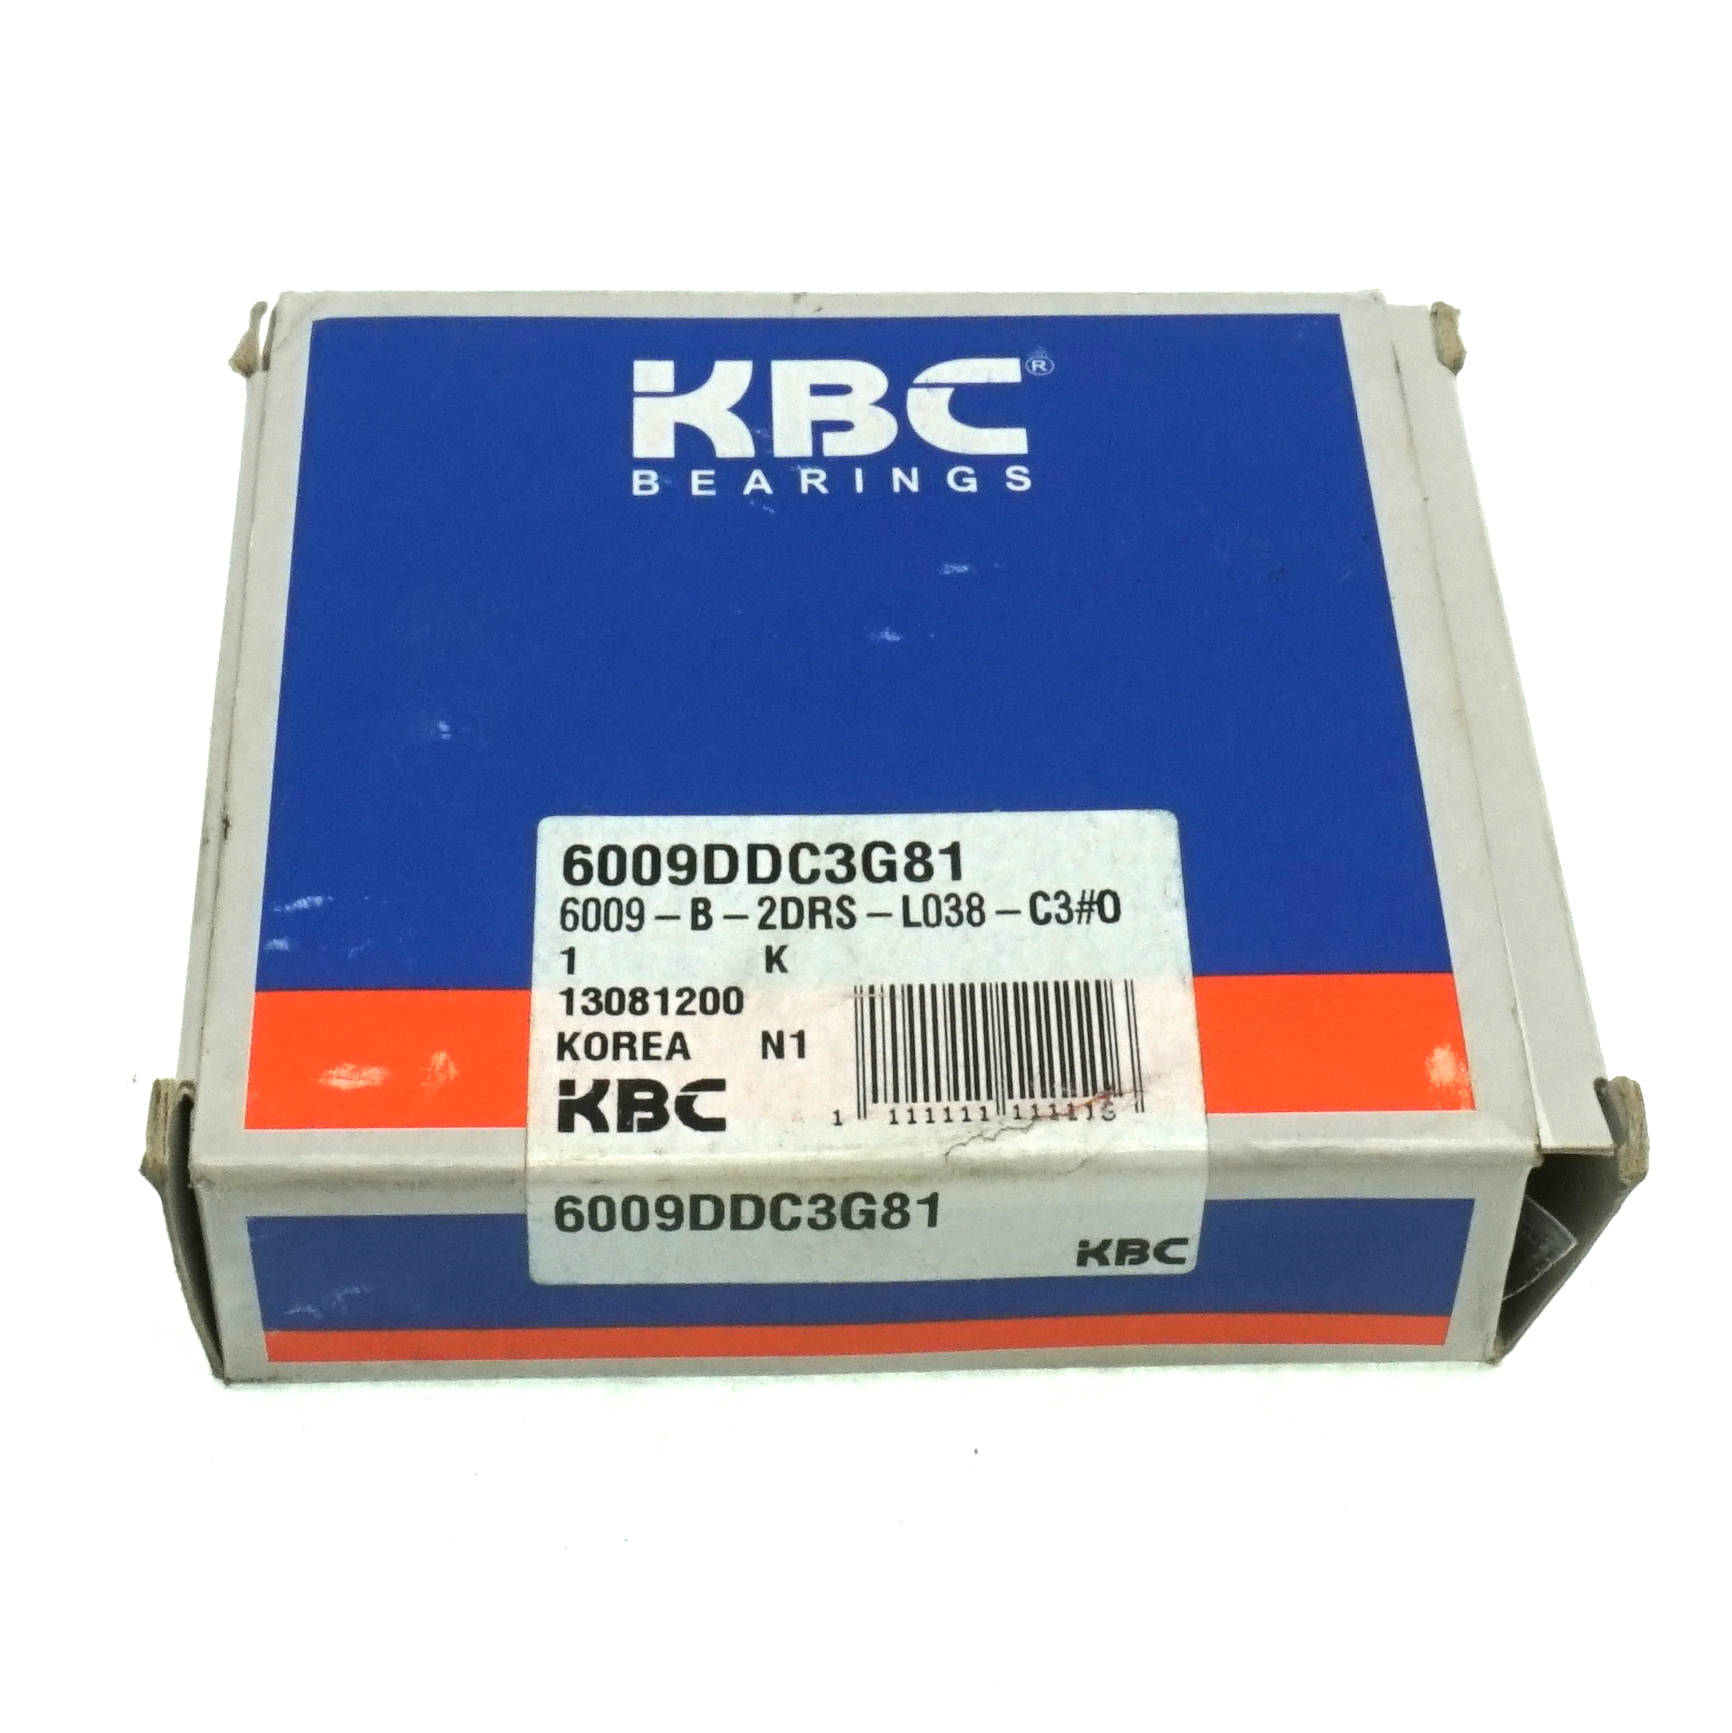 6009DDC3G81 KBC Ball Bearing, Rubber Sealed 4